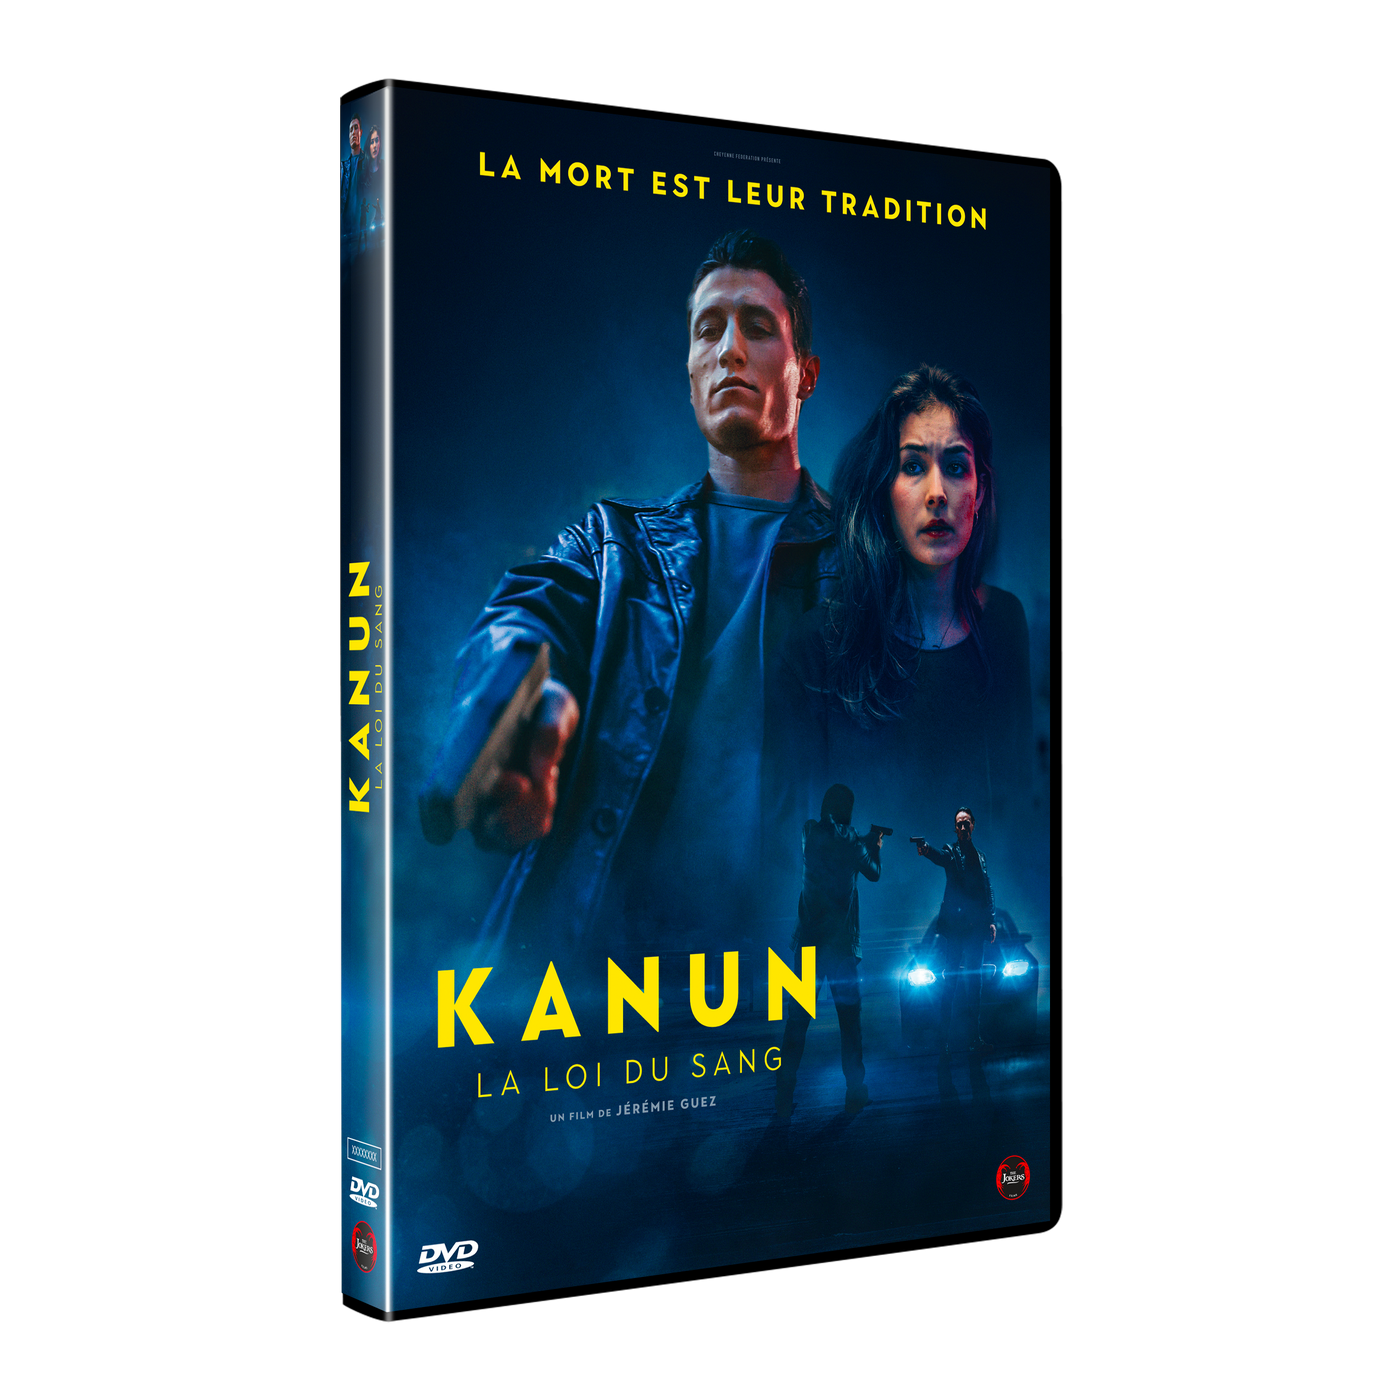 DVD "KANUN"